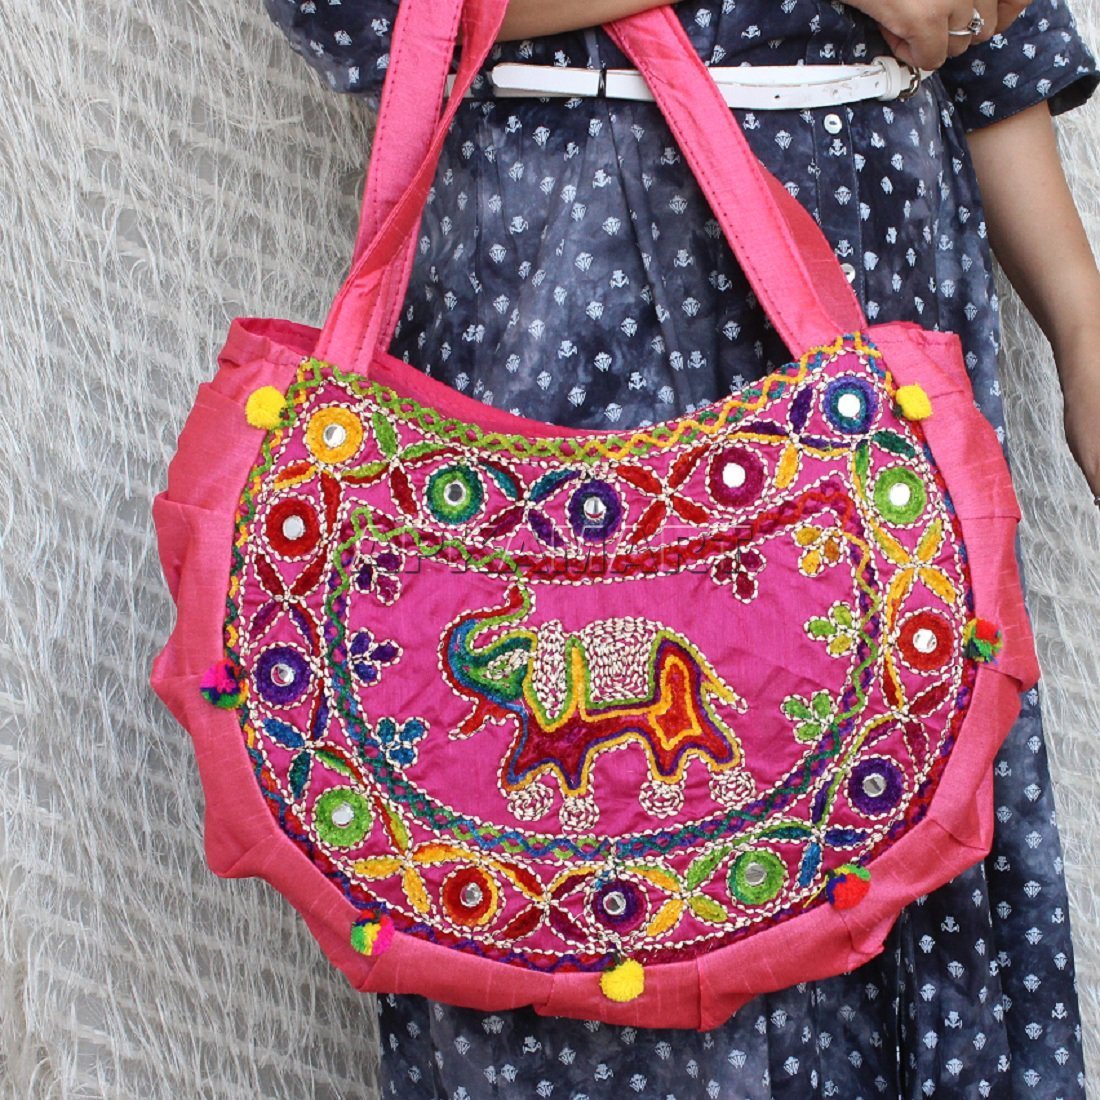 Handmade ladies purse embroidery Indian Design sling bag crossbody bohemian  look | eBay